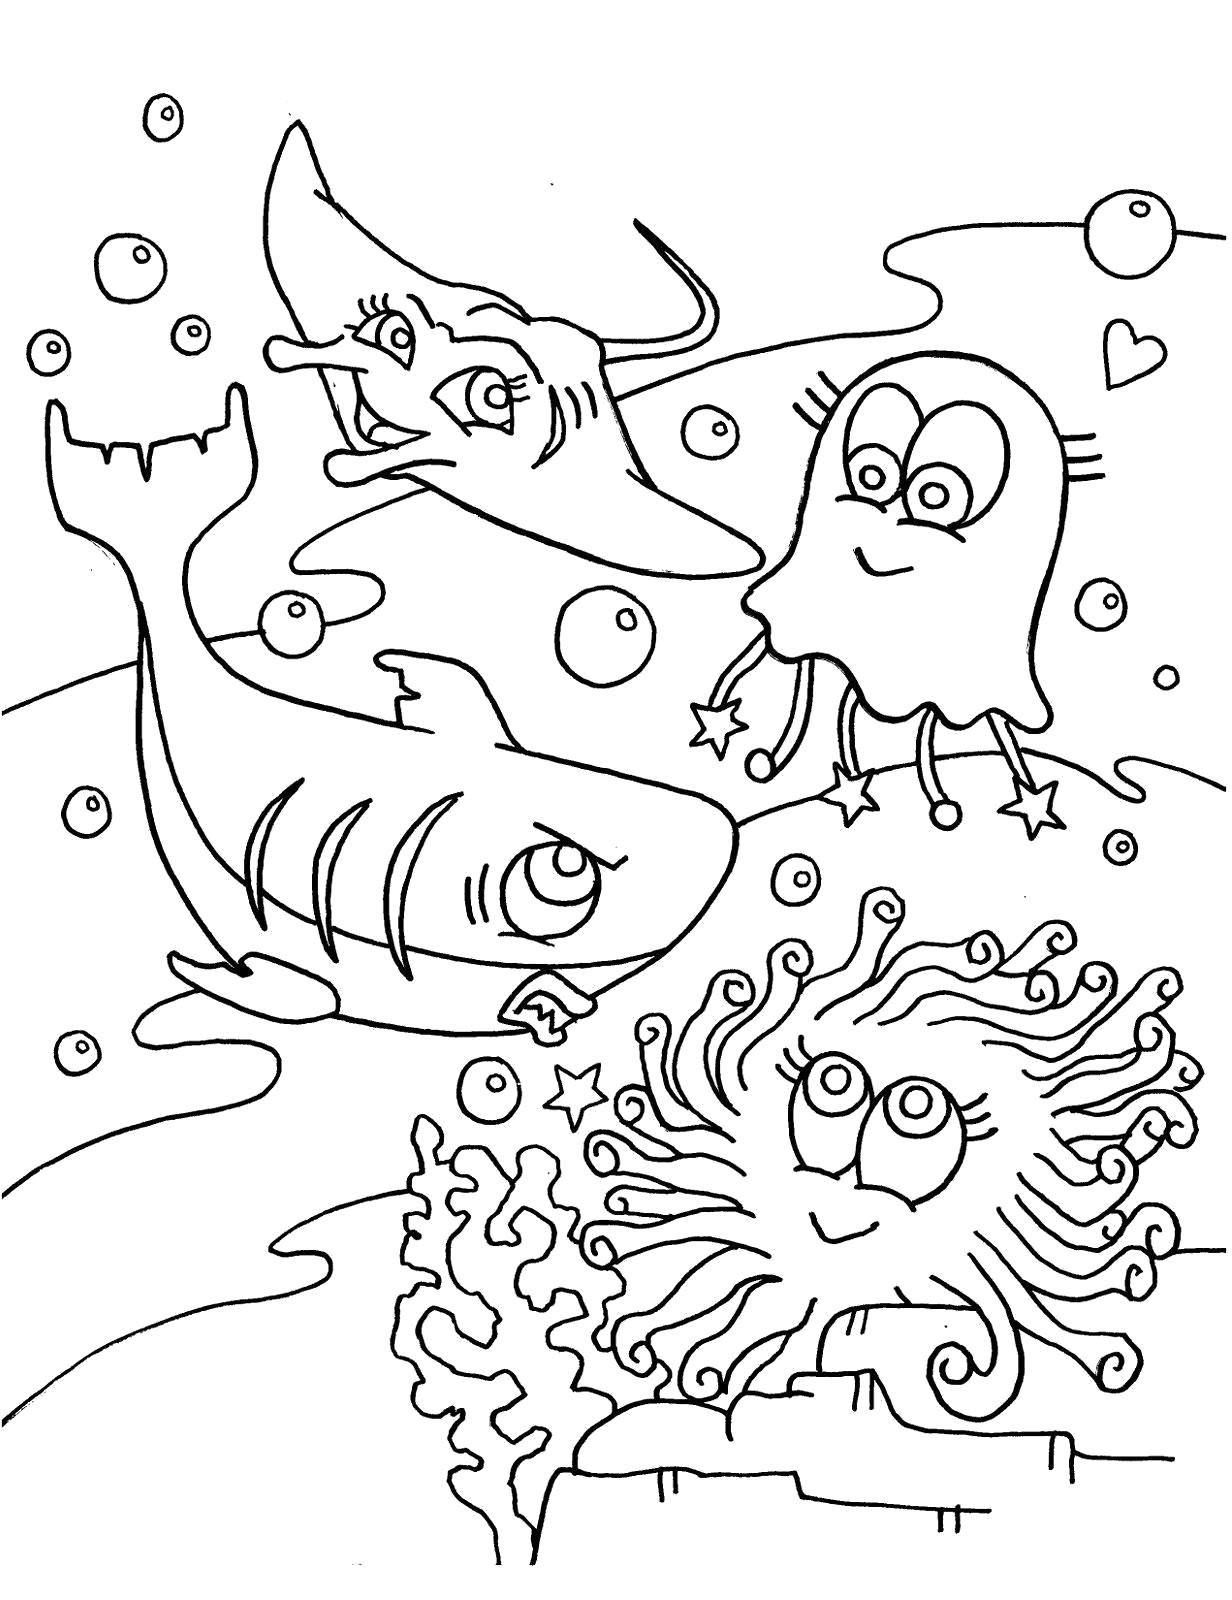 Название: Раскраска Раскраска рыба. обитатели моря скат медуза акула и чудик. Категория: Рыбы. Теги: рыбы.